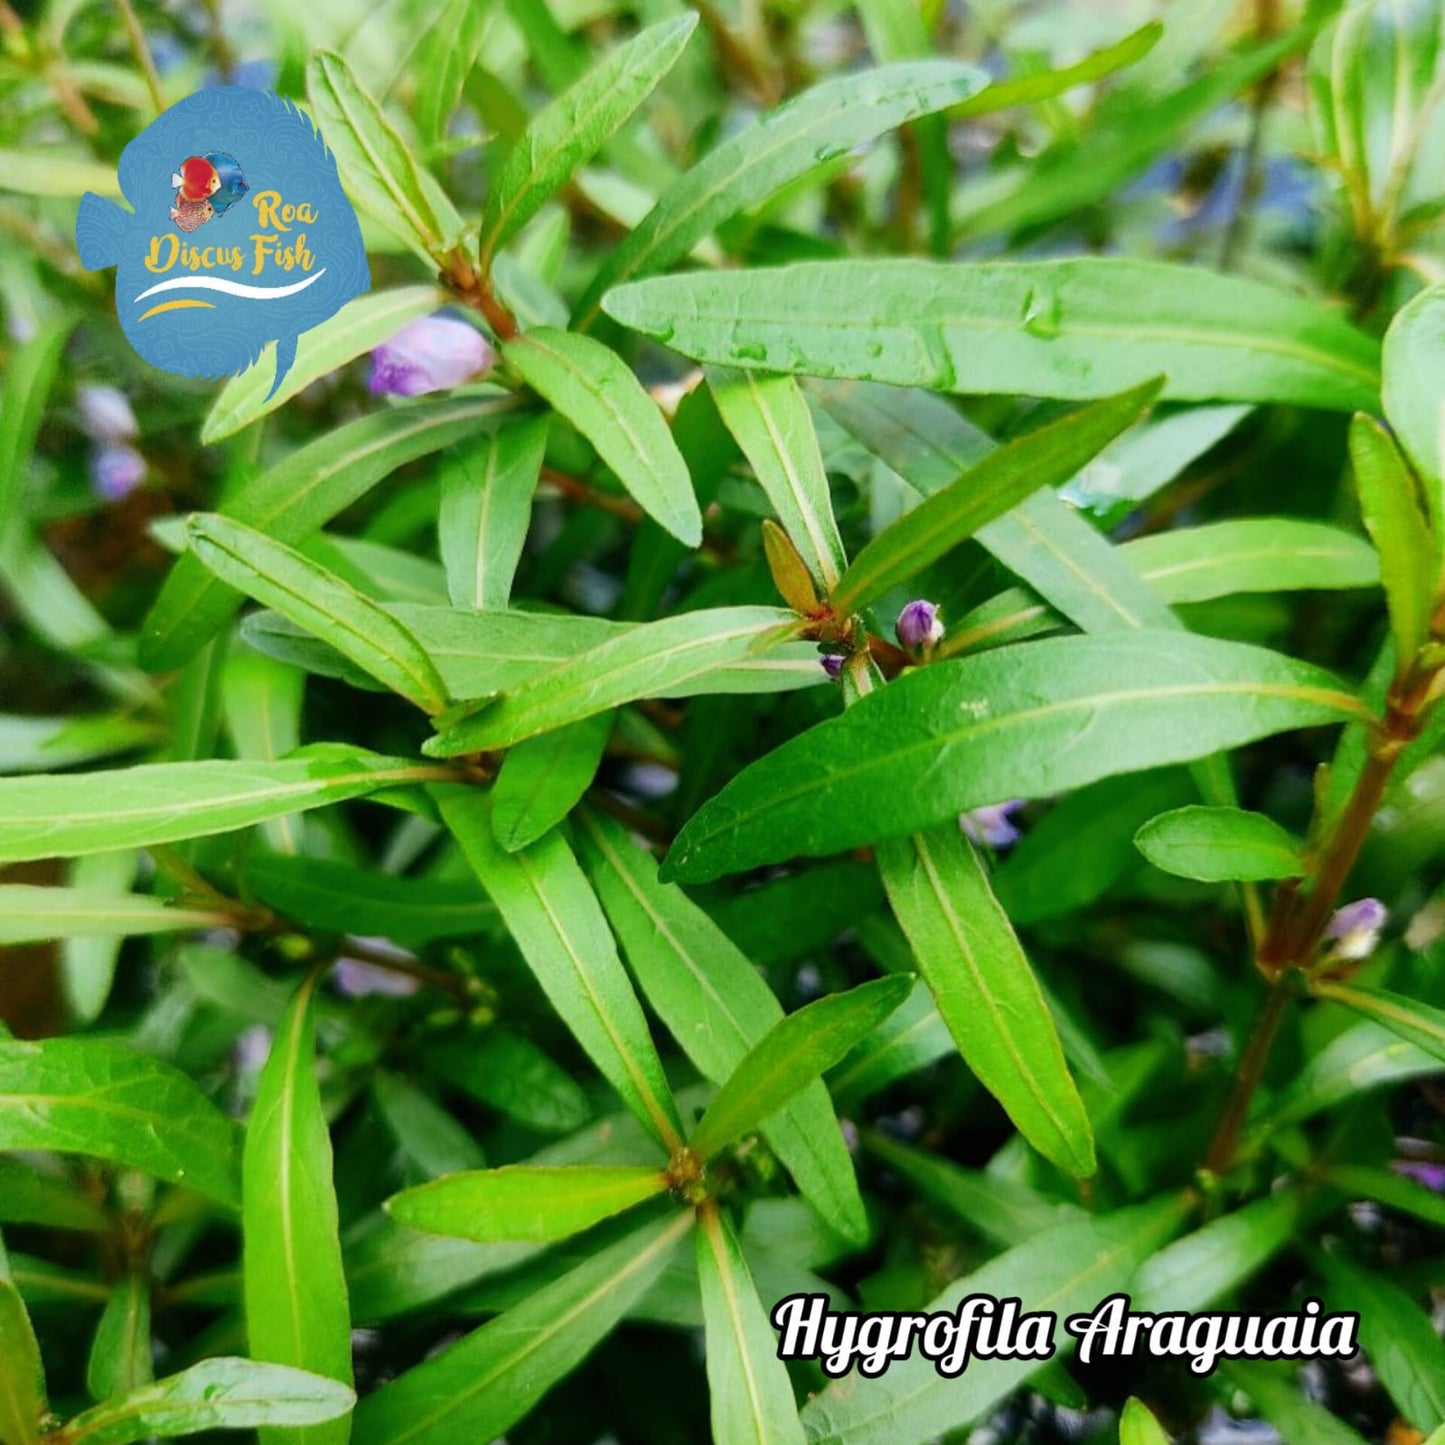 Hygrofila Araguaia - Discus Roa Fish